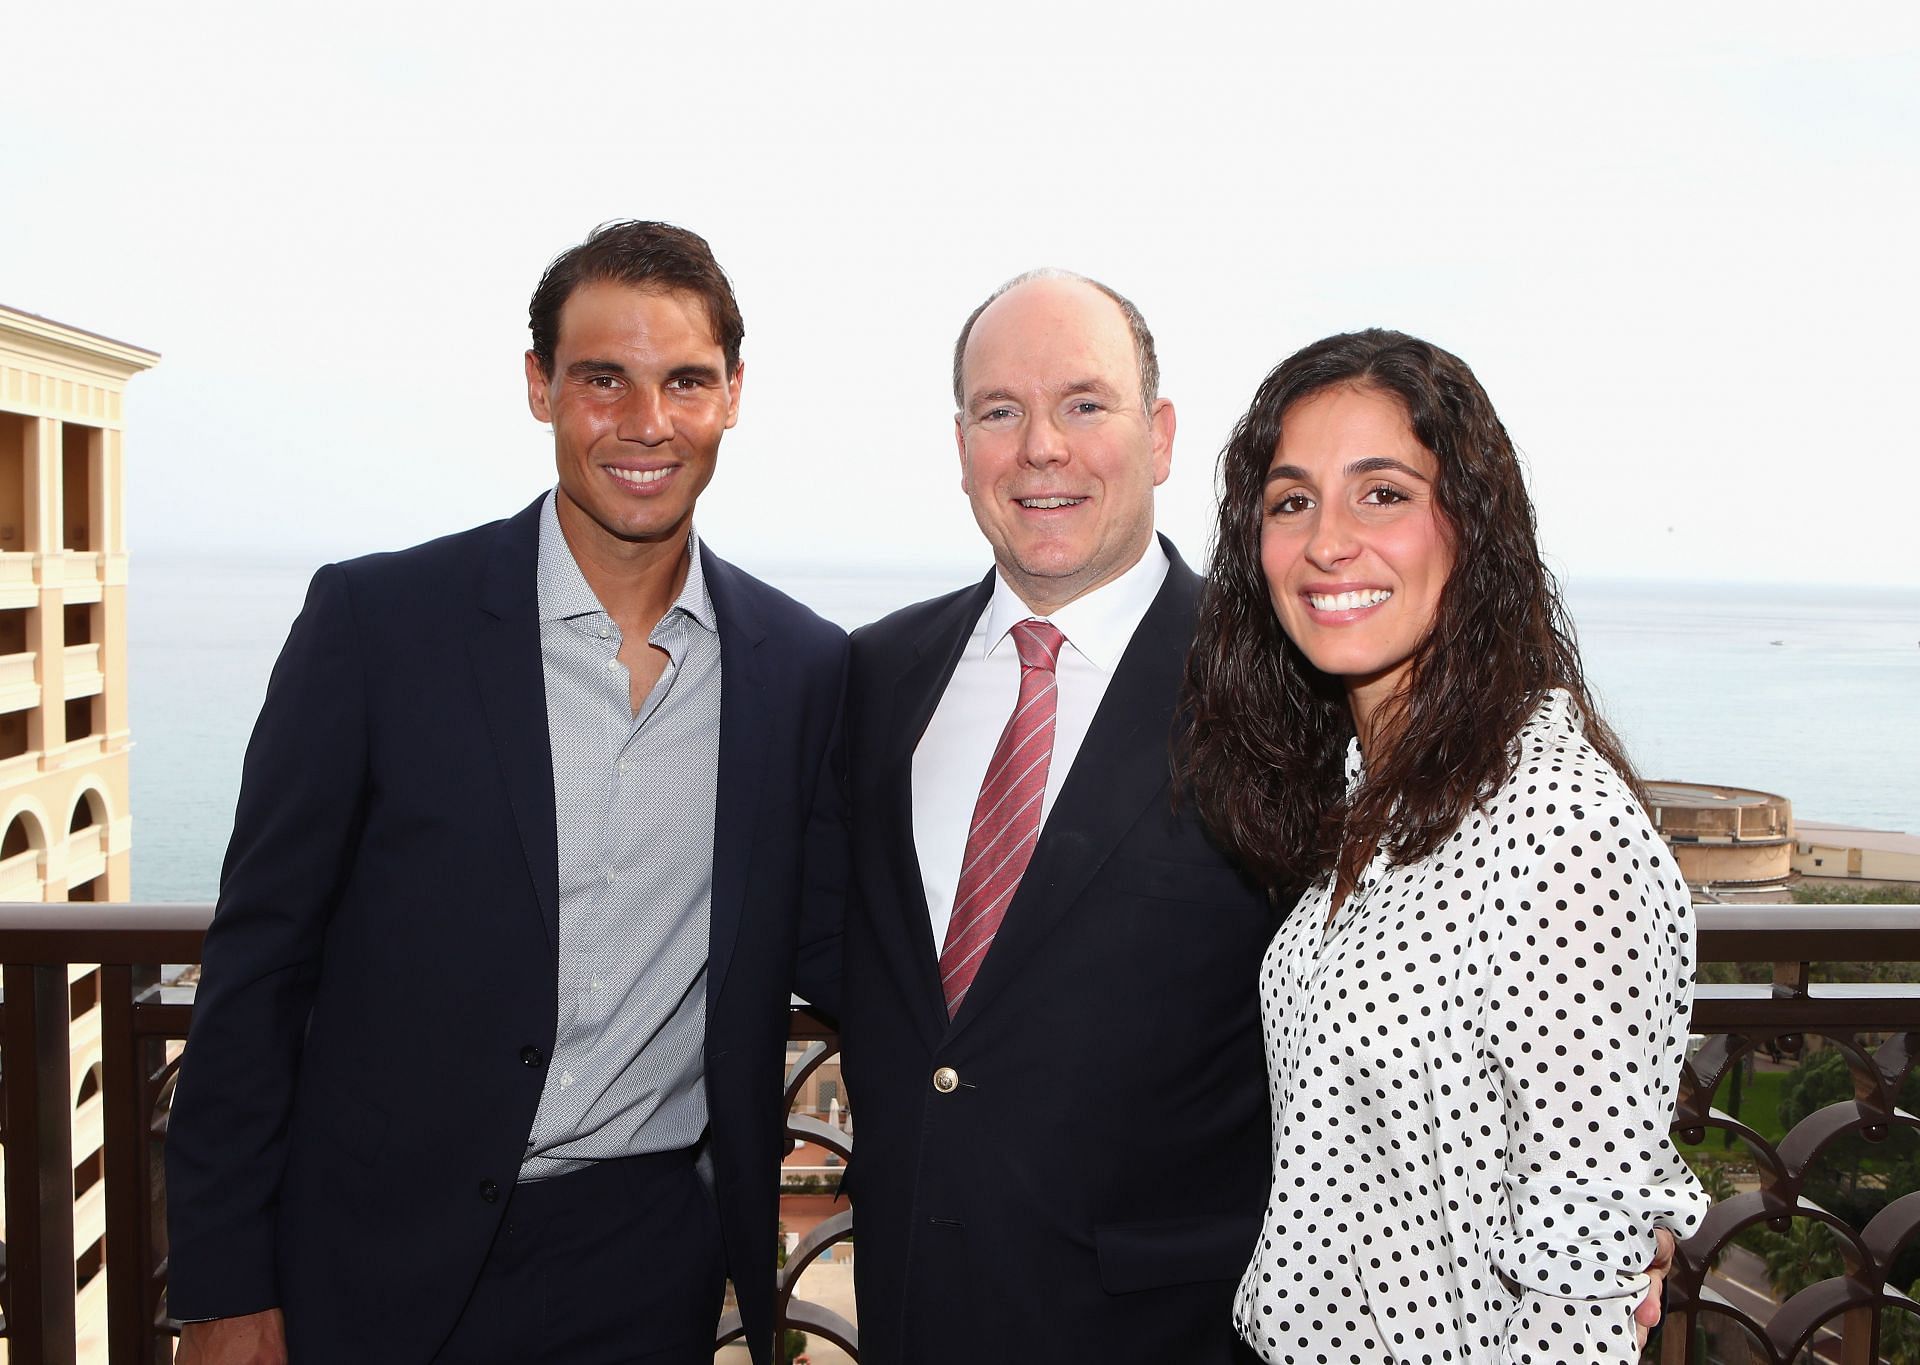 Rafael Nadal and his wife Maria Francisca Perello alongside Albert II, the Prince of Monaco. [File photo]